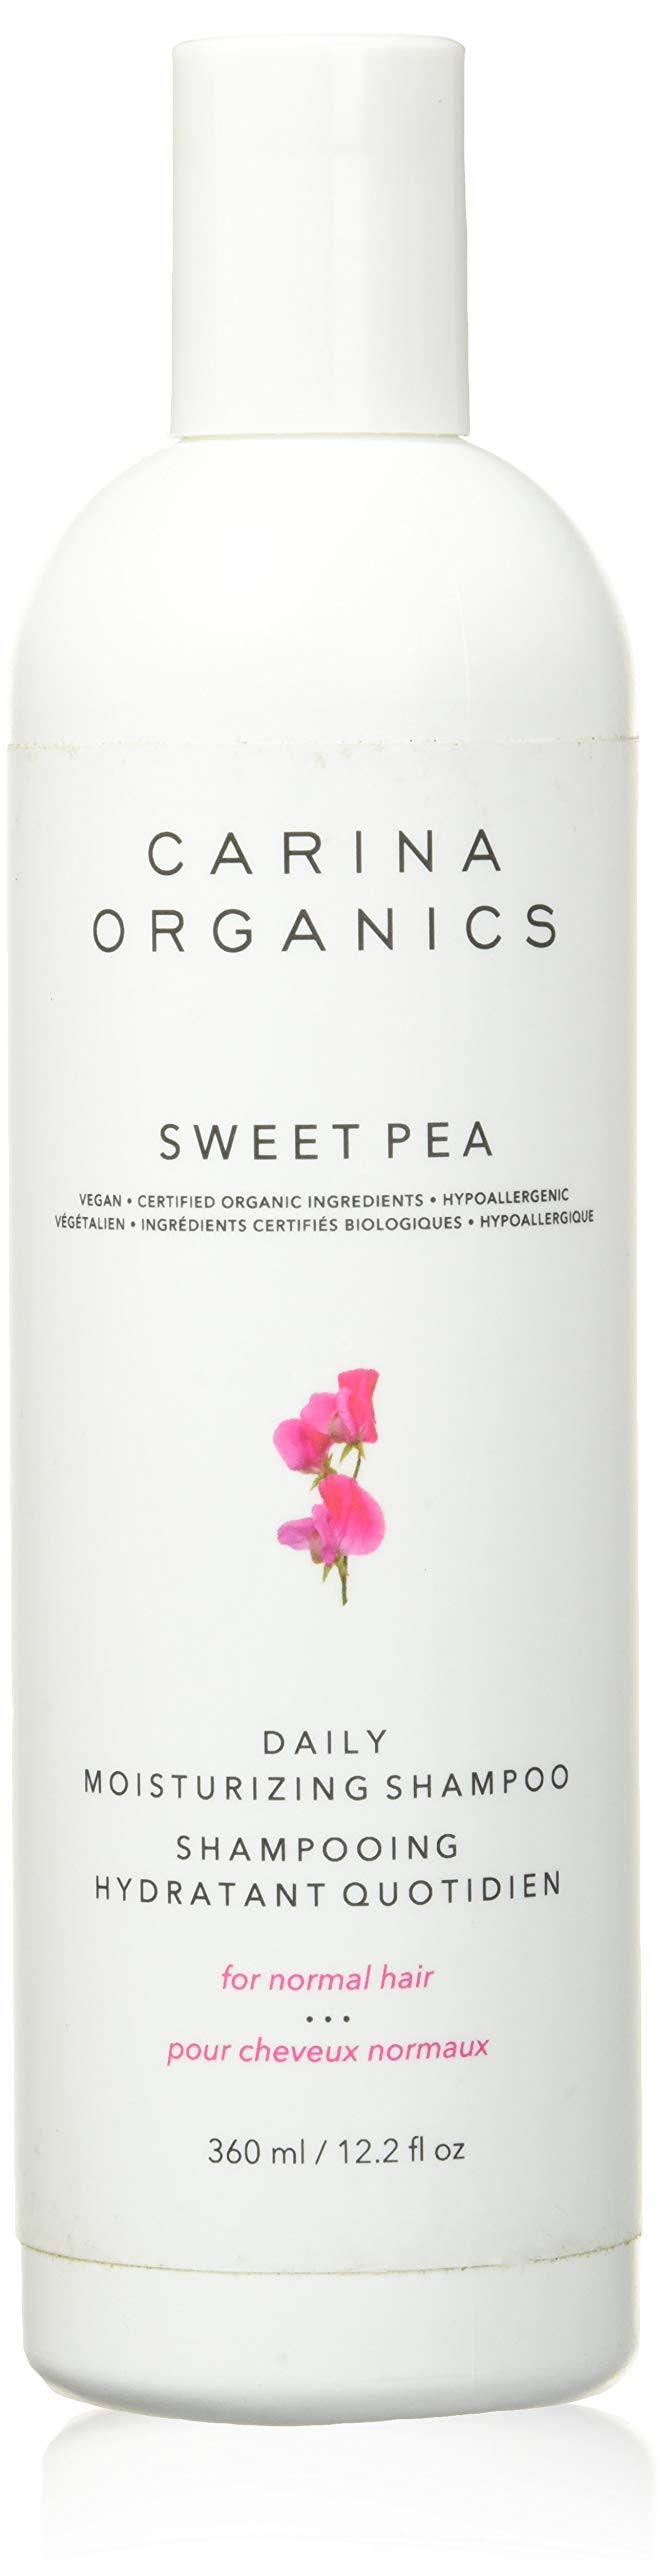 Carina Organics Daily Moisturizing Shampoo - Sweet Pea, 360ml